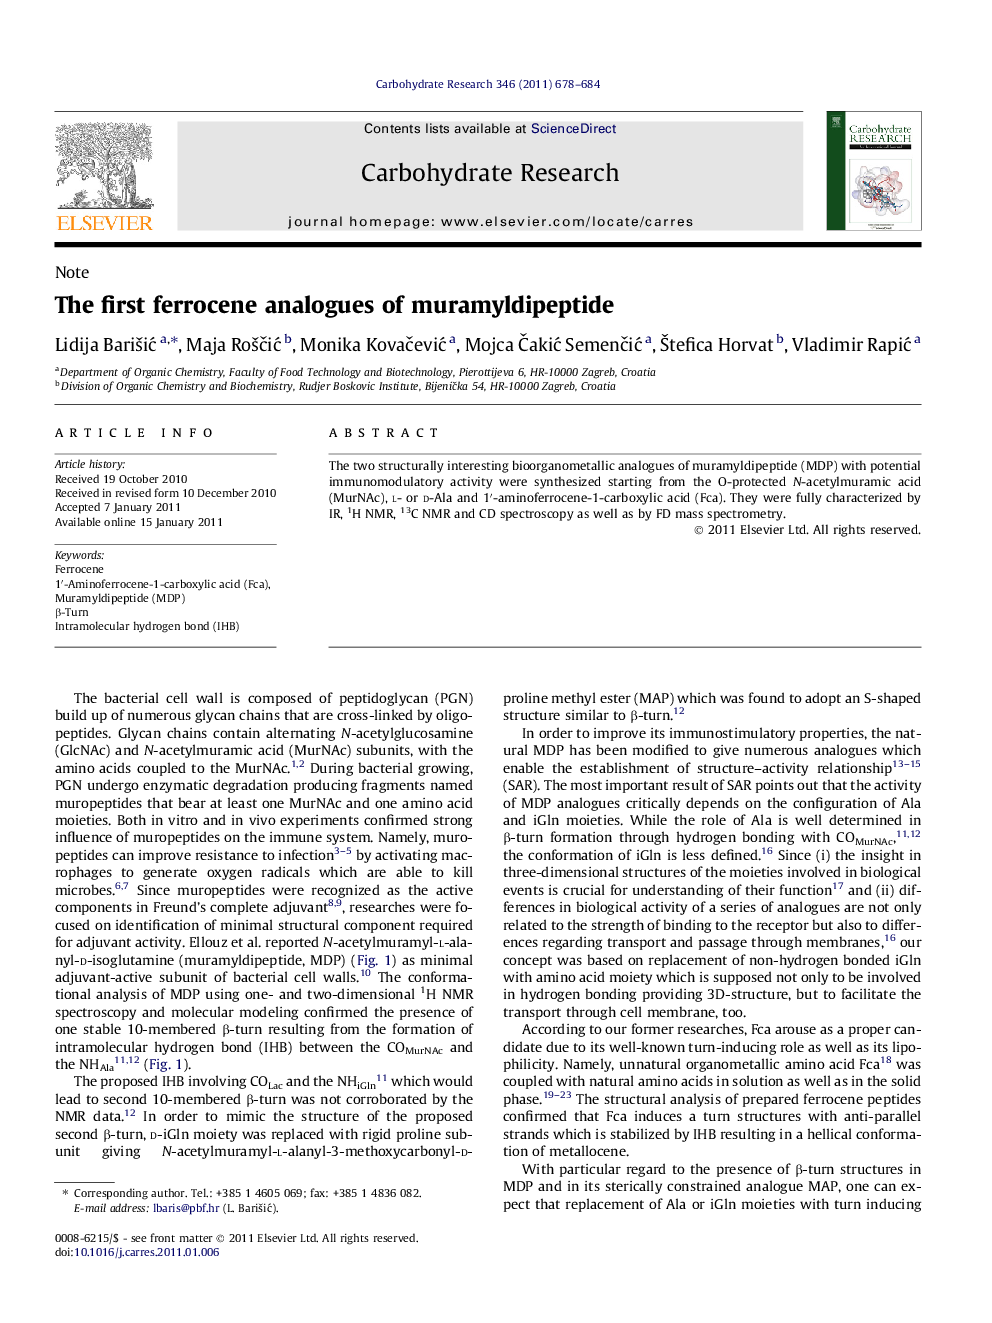 The first ferrocene analogues of muramyldipeptide